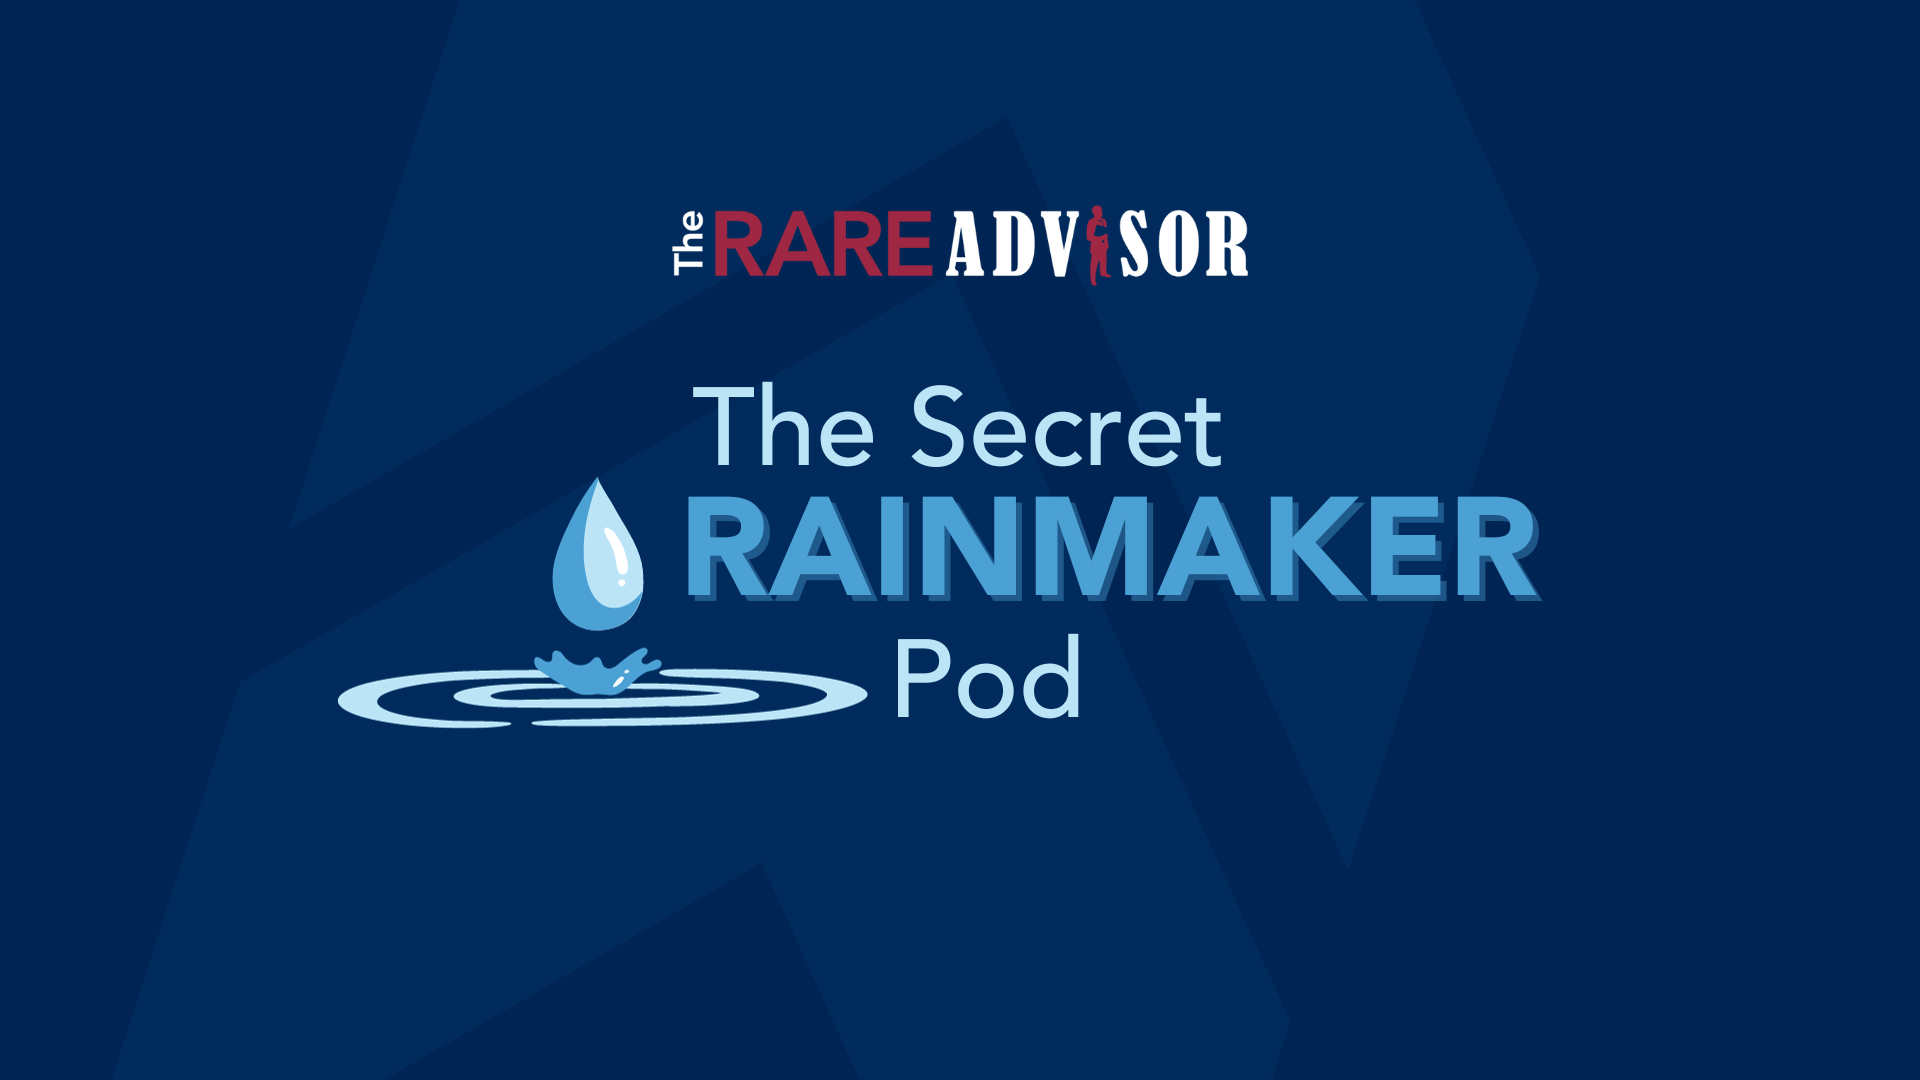 The RARE Advisor: The Secret Rainmaker Pod